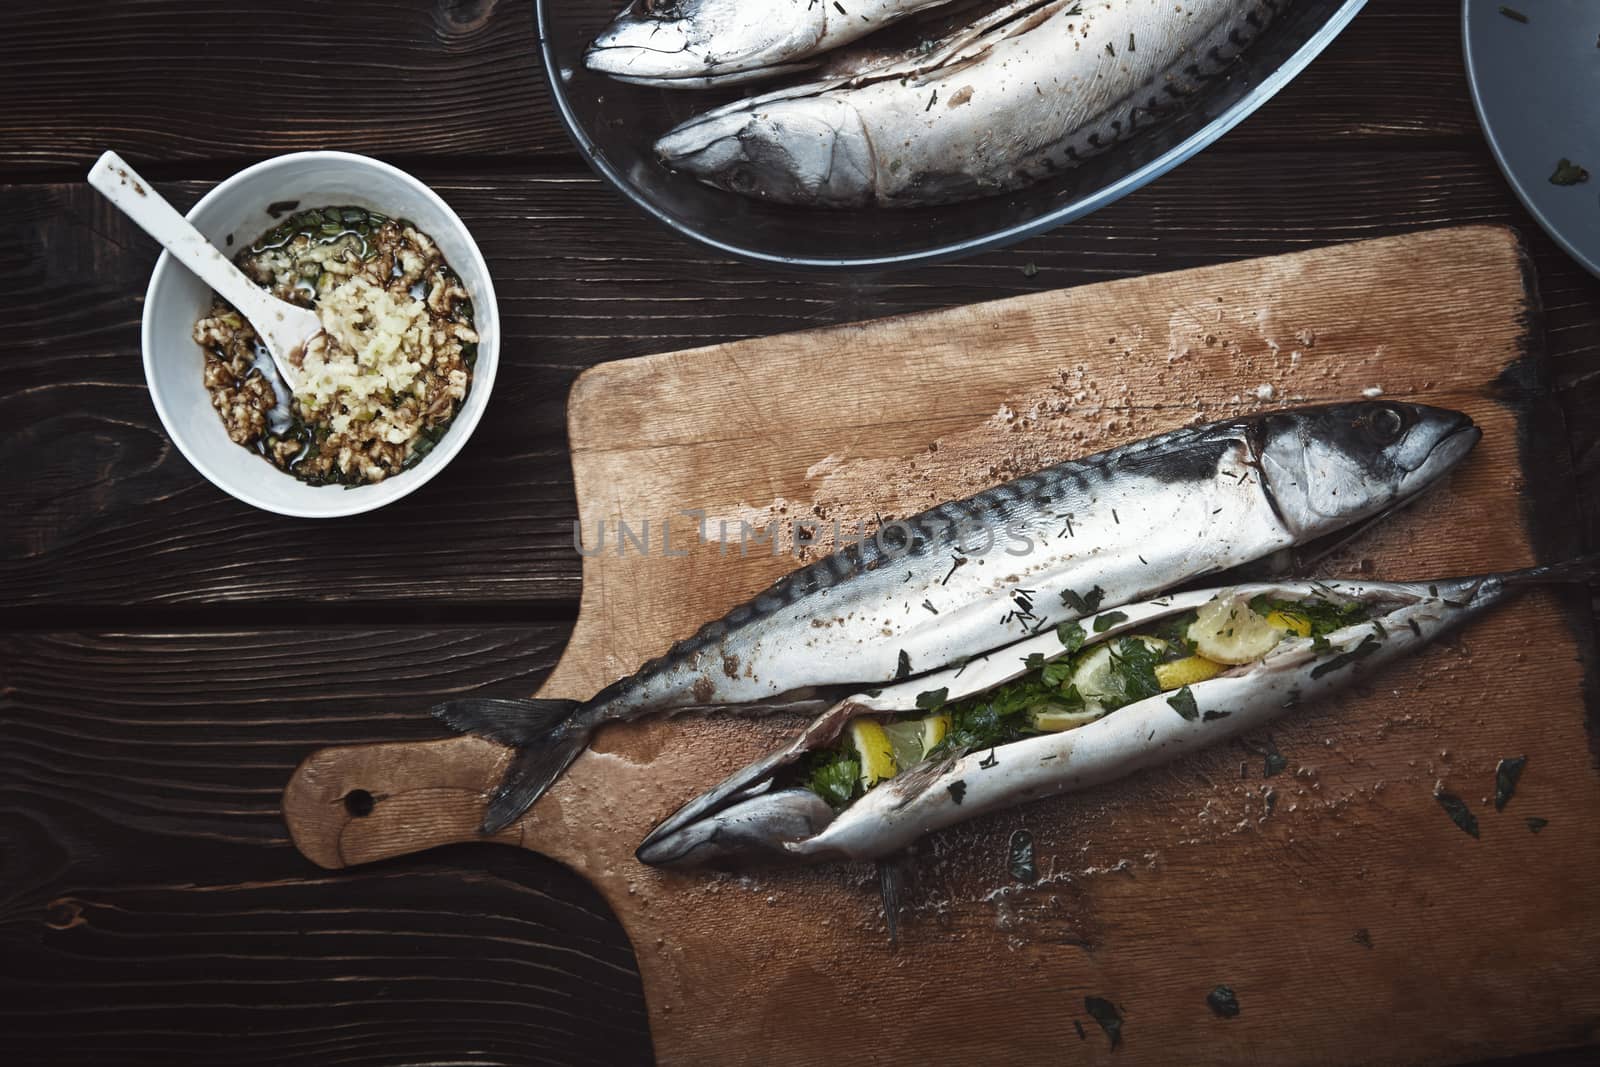 Fish food preparation by Novic